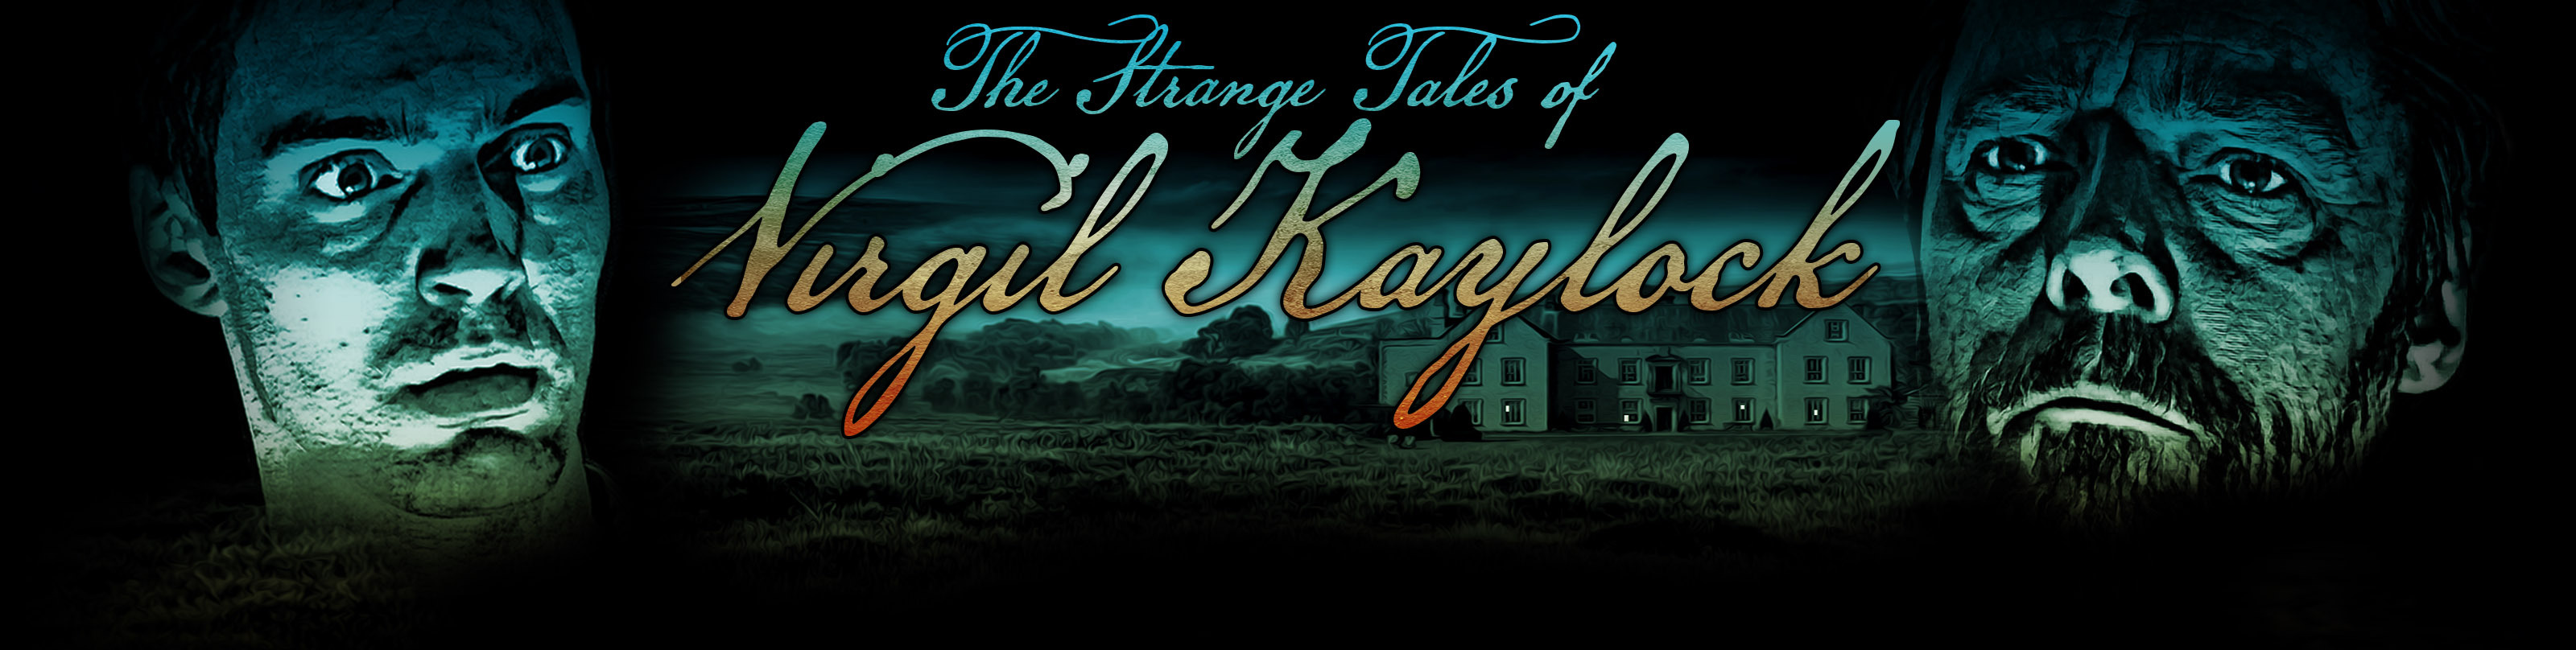 The Strange Tales of Virgil Kaylock